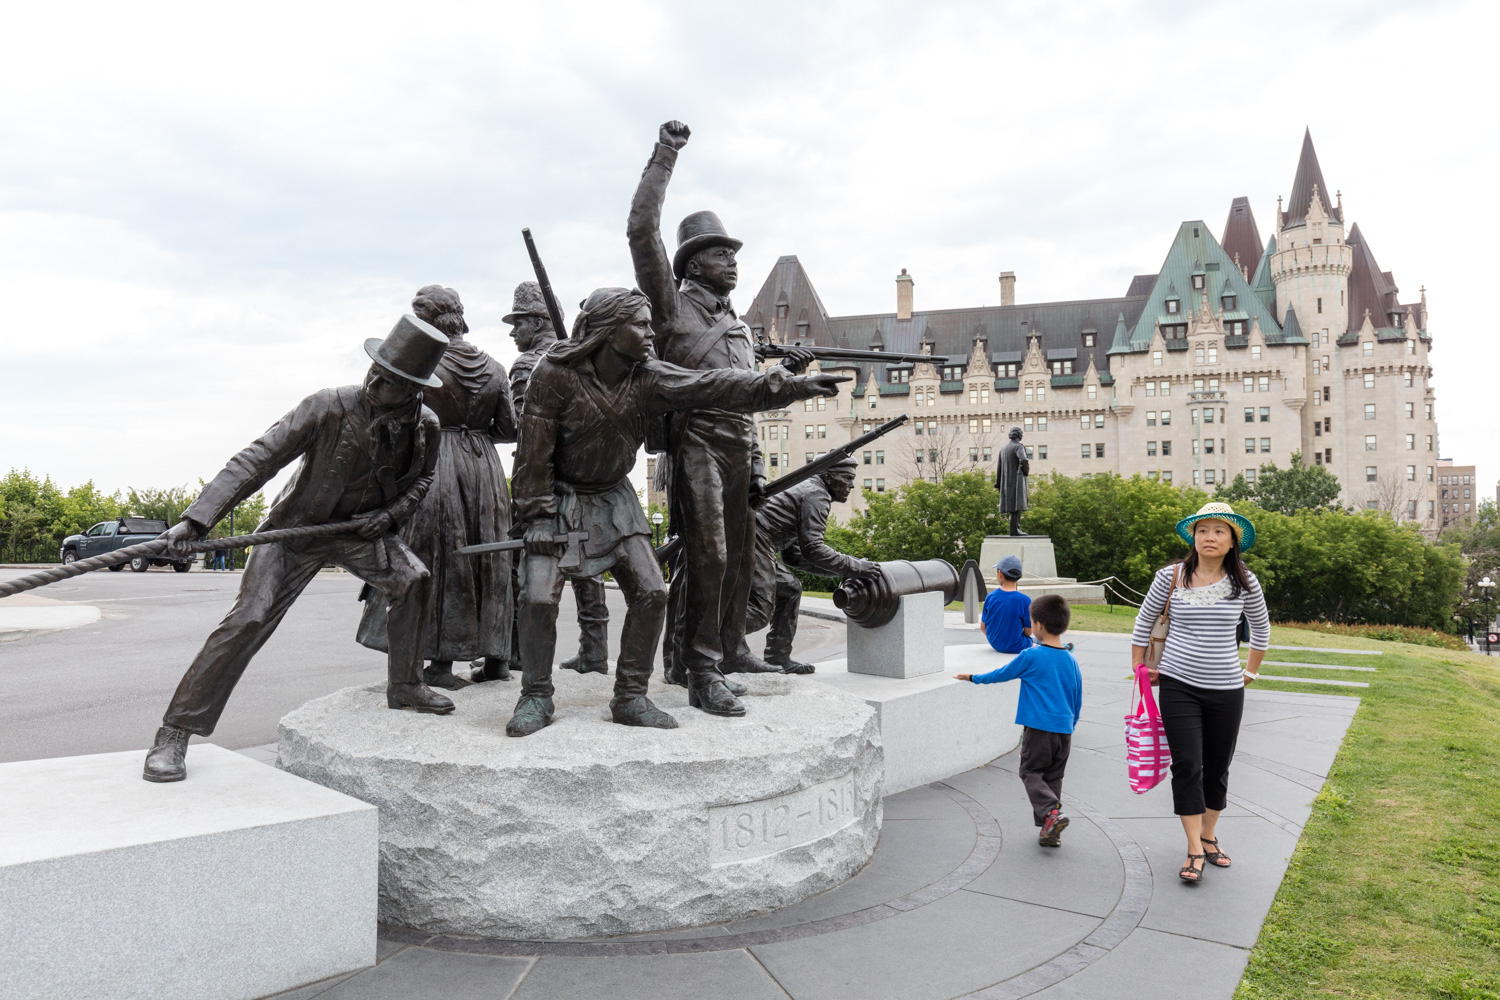 "War of 1812 Monument, Triumph Through Diversity"